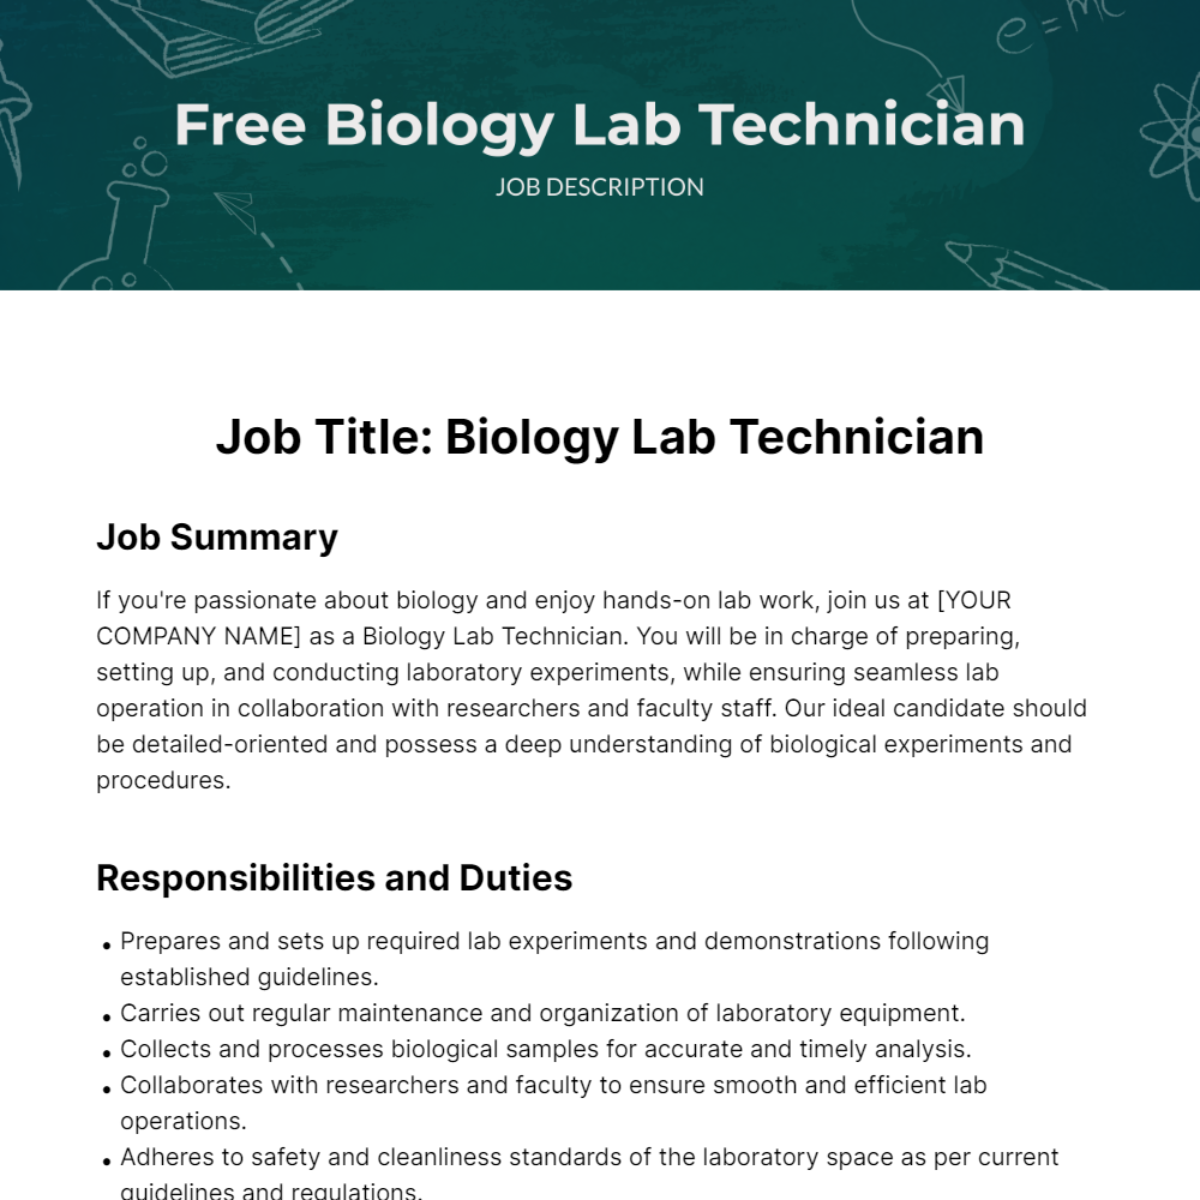 Free Biology Lab Technician Job Description Template